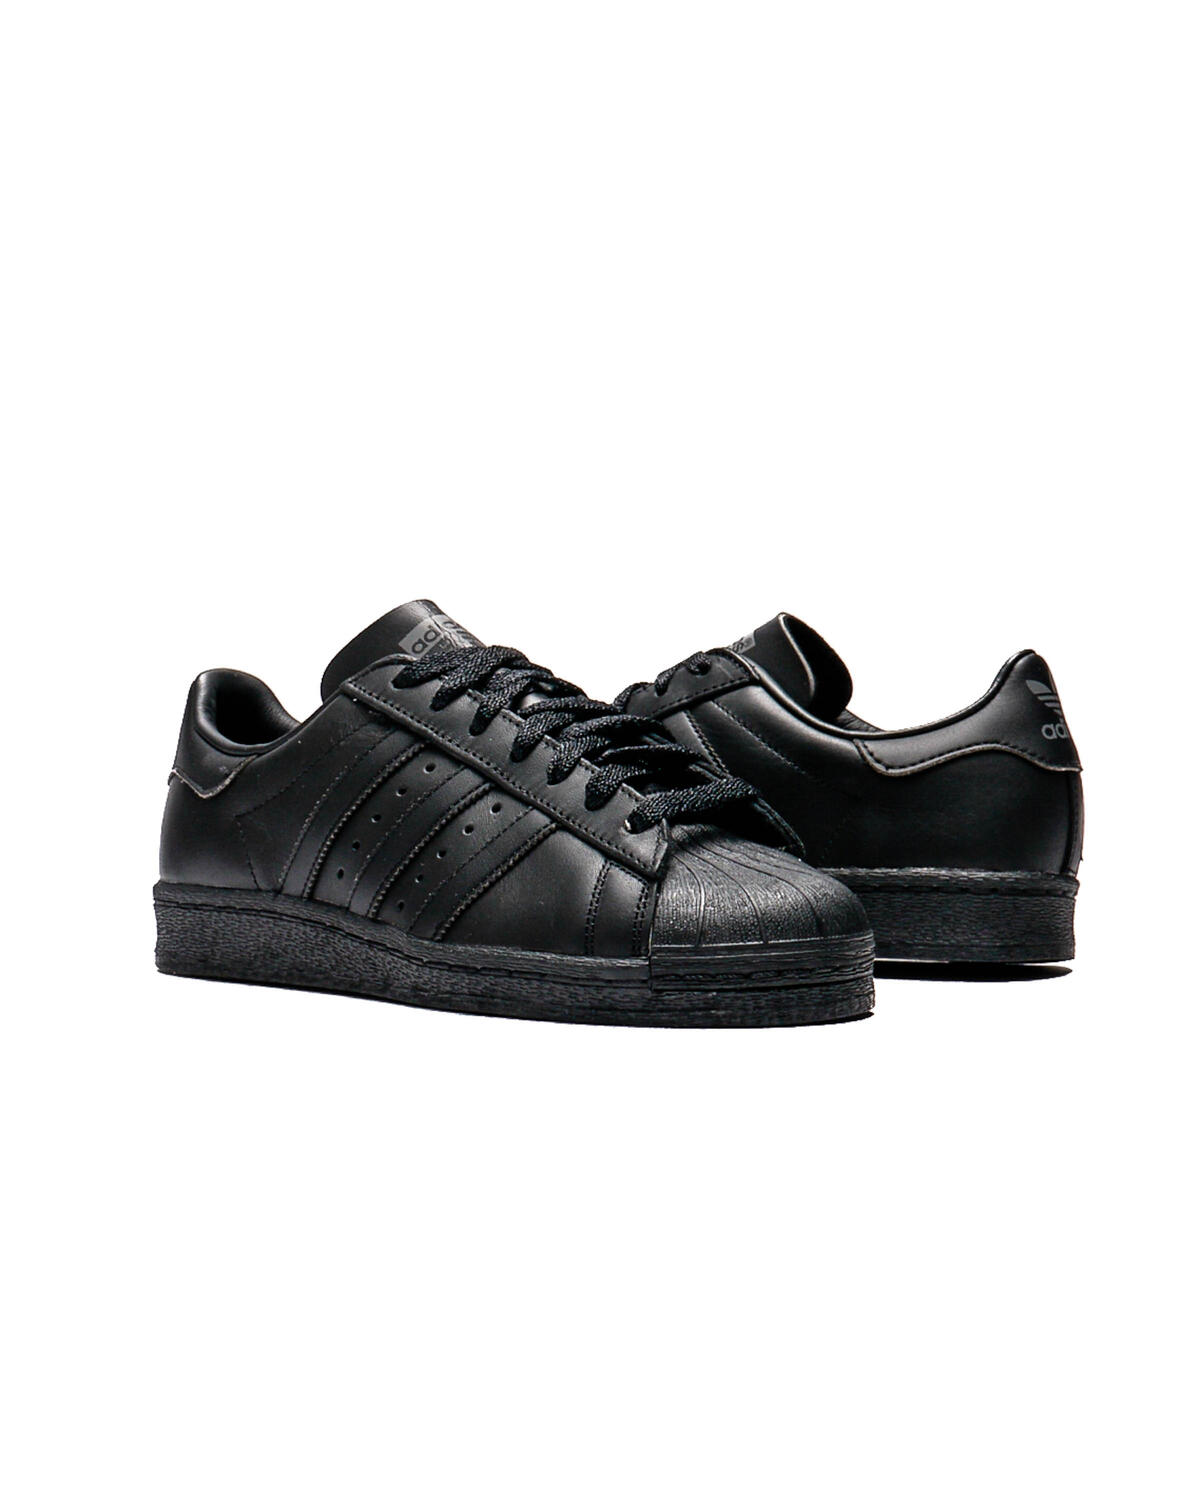 Adidas Original Superstar Shell Toe Cap White Black Leather Sneakers  Men's 4.5